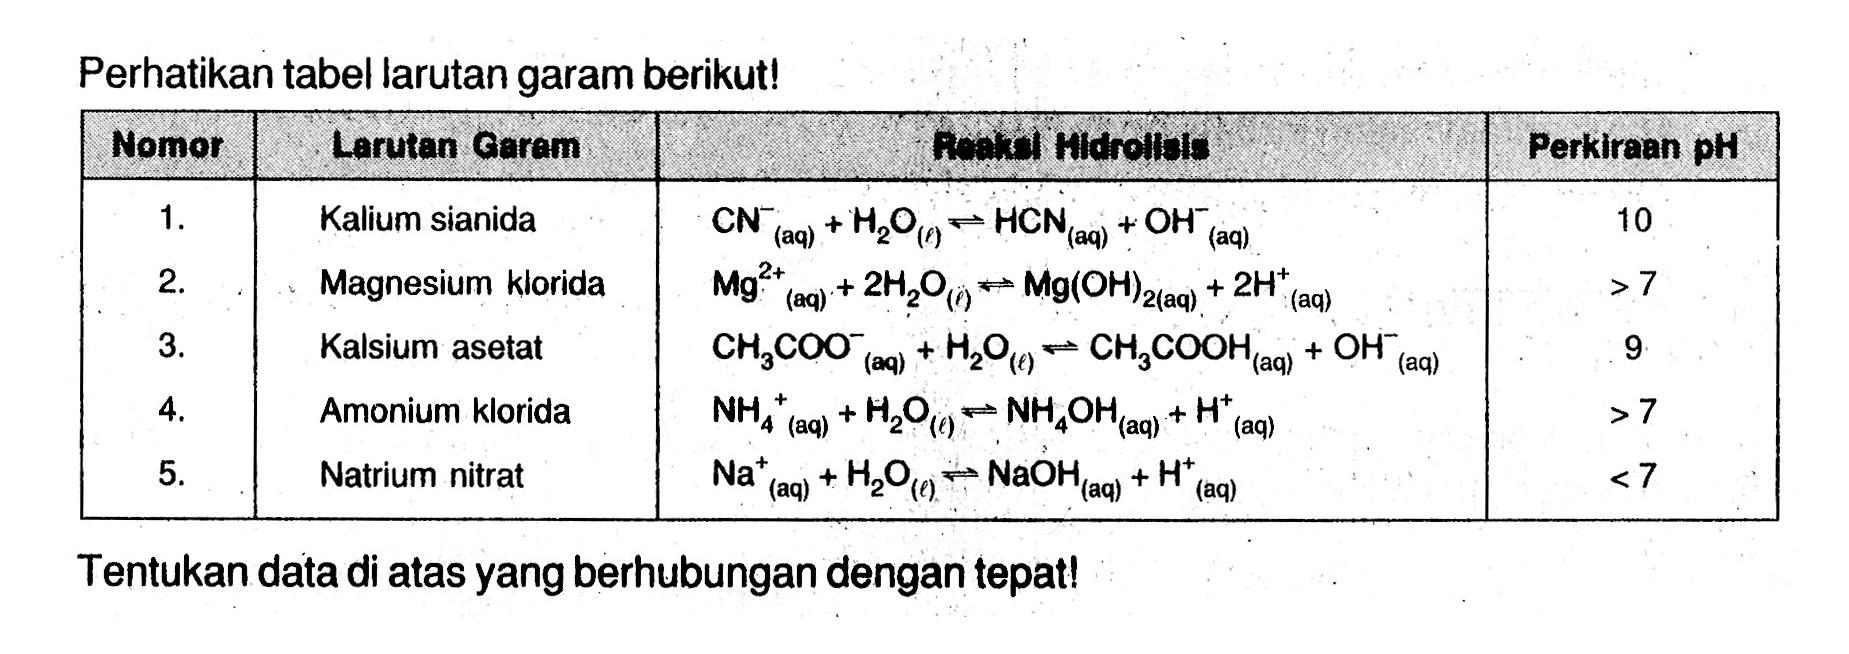 Perhatikan tabel larutan garam berikut!Nomor Larutan Garam Reaksi Hidrolisis Perkiraan pH1. Kalium sianida CN^- (aq)+H2O(l)<=>HCn(aq)+OH^- (aq) 102. Magnesium klorida Mg^(2+) (aq)+2H2O(l) <=>Mg(OH)2 (aq)+2H^+ (aq) >73. Kalium asetatAmonium kloridaNatrium nitratTentukan data di atas yang berhubungan dengan tepat!